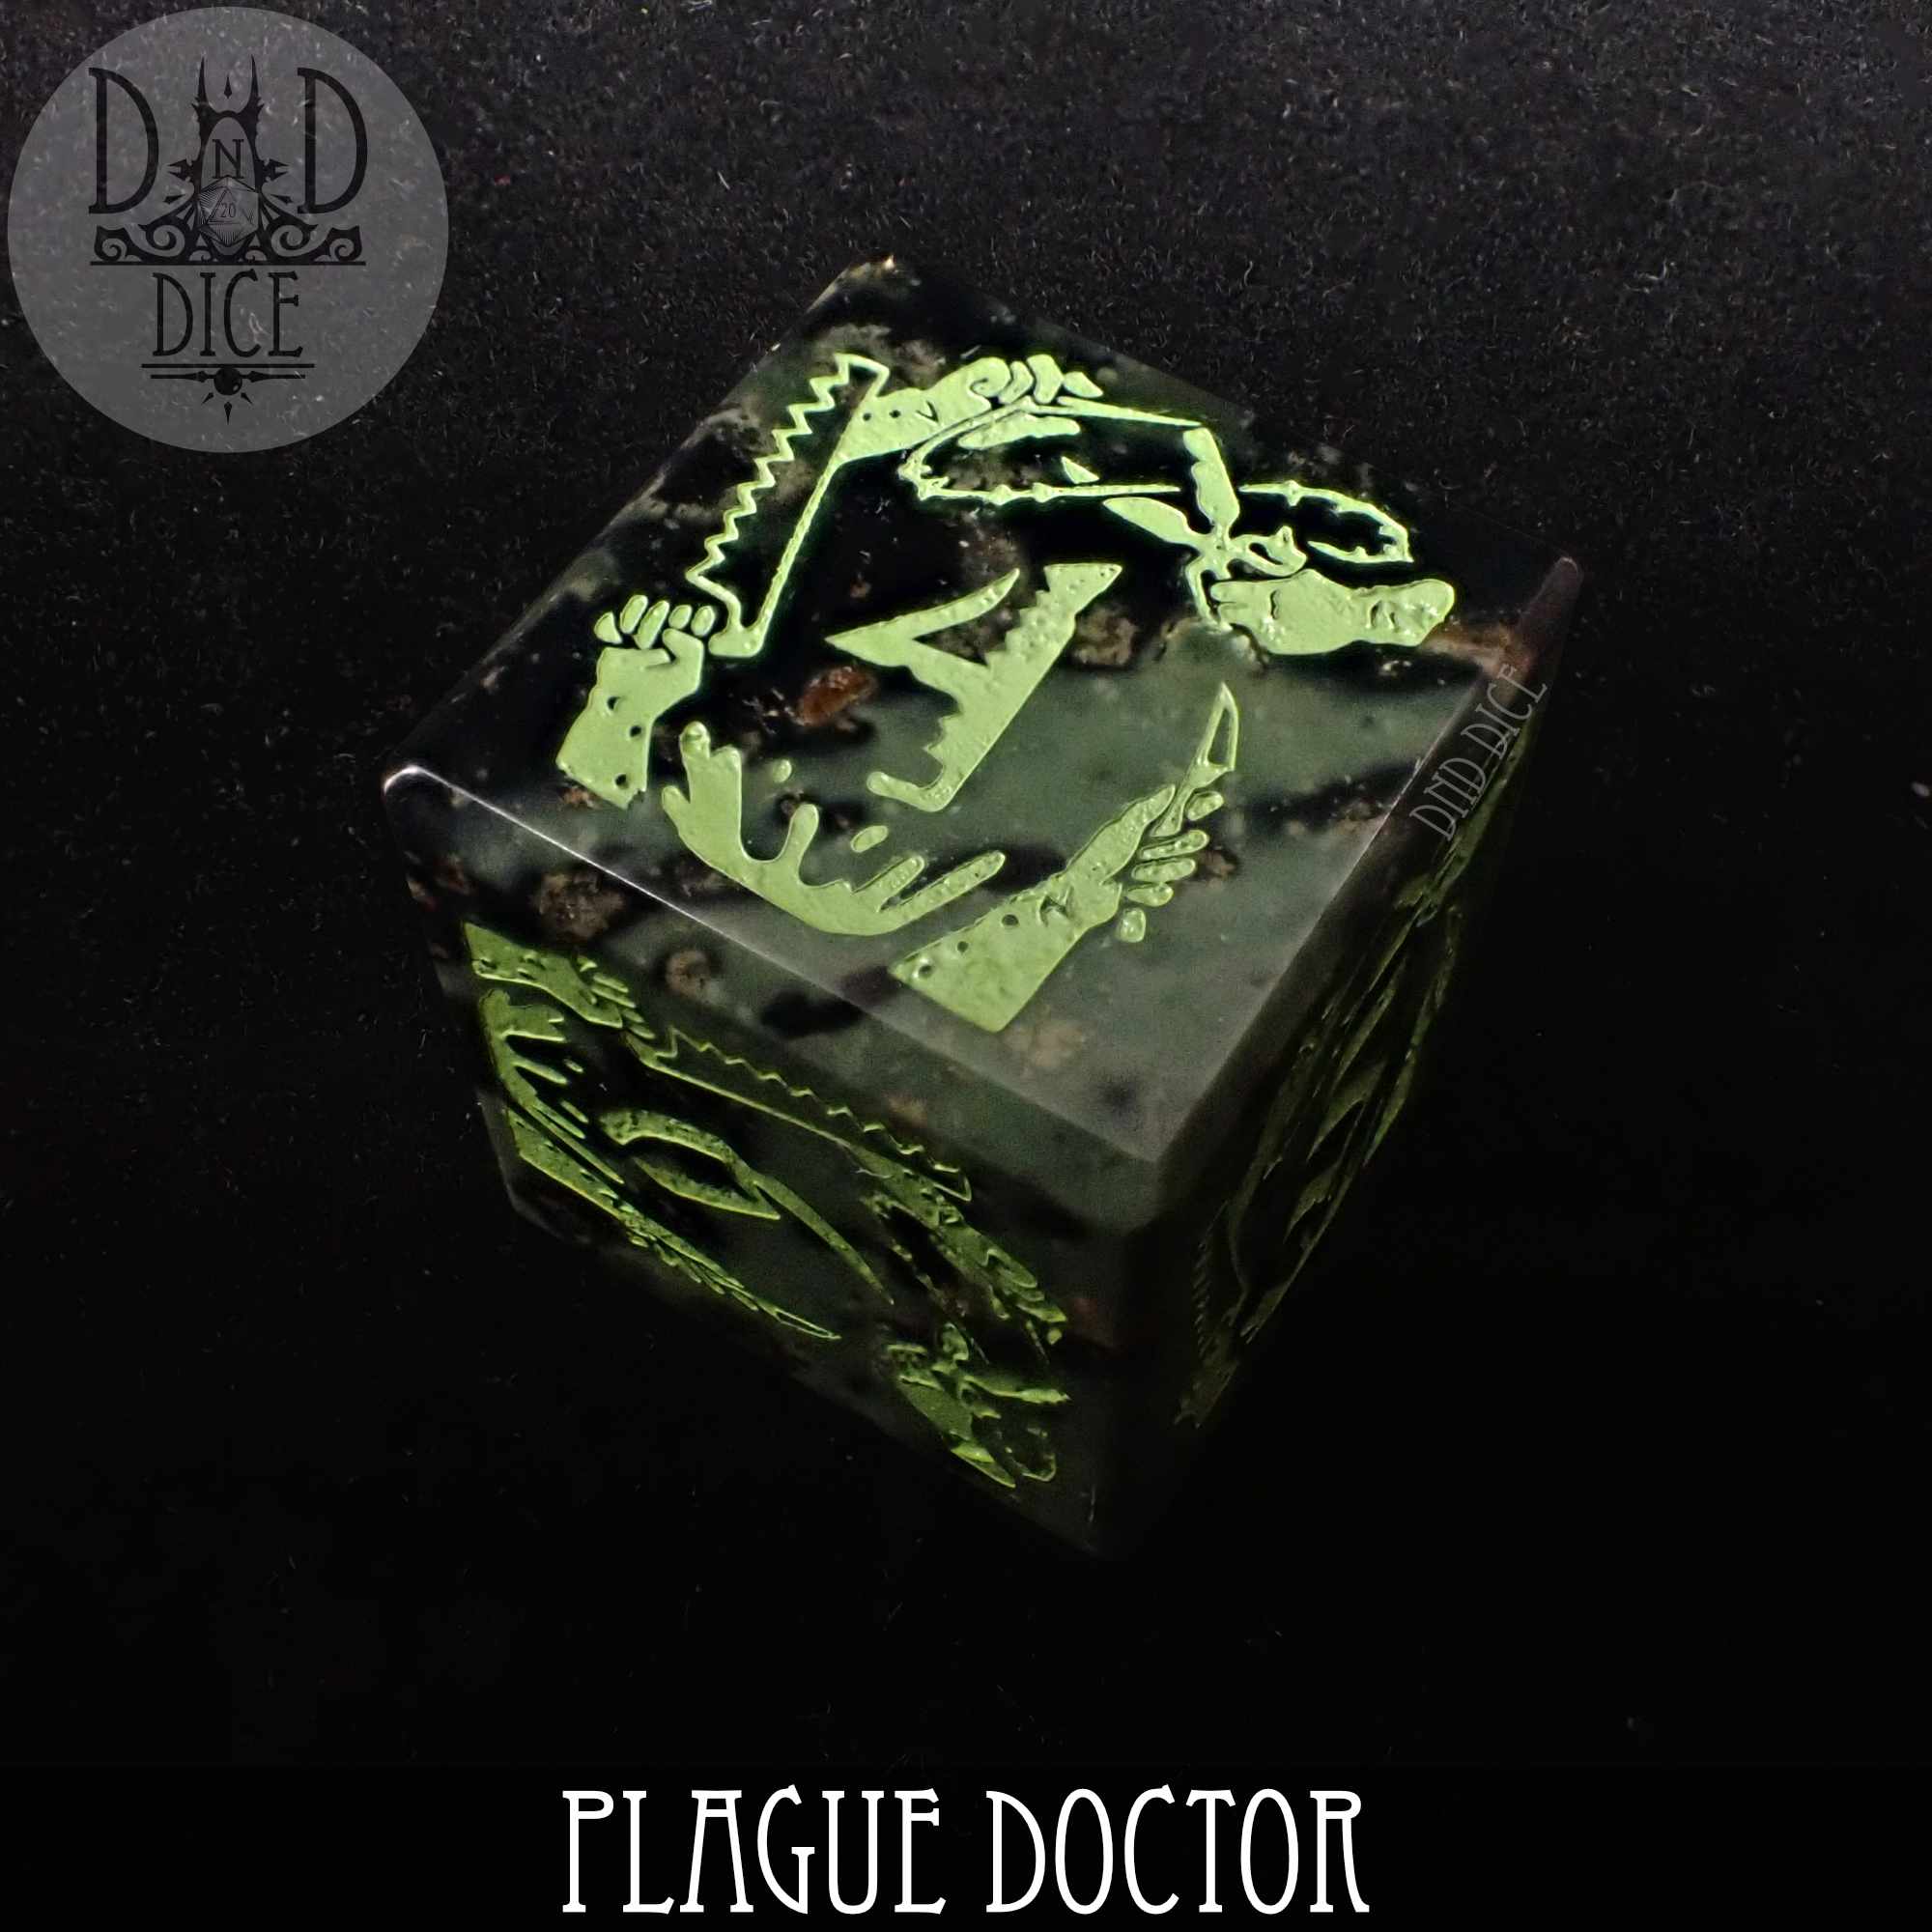 Plague Doctor Gemstone Dice Set (Gift Box)